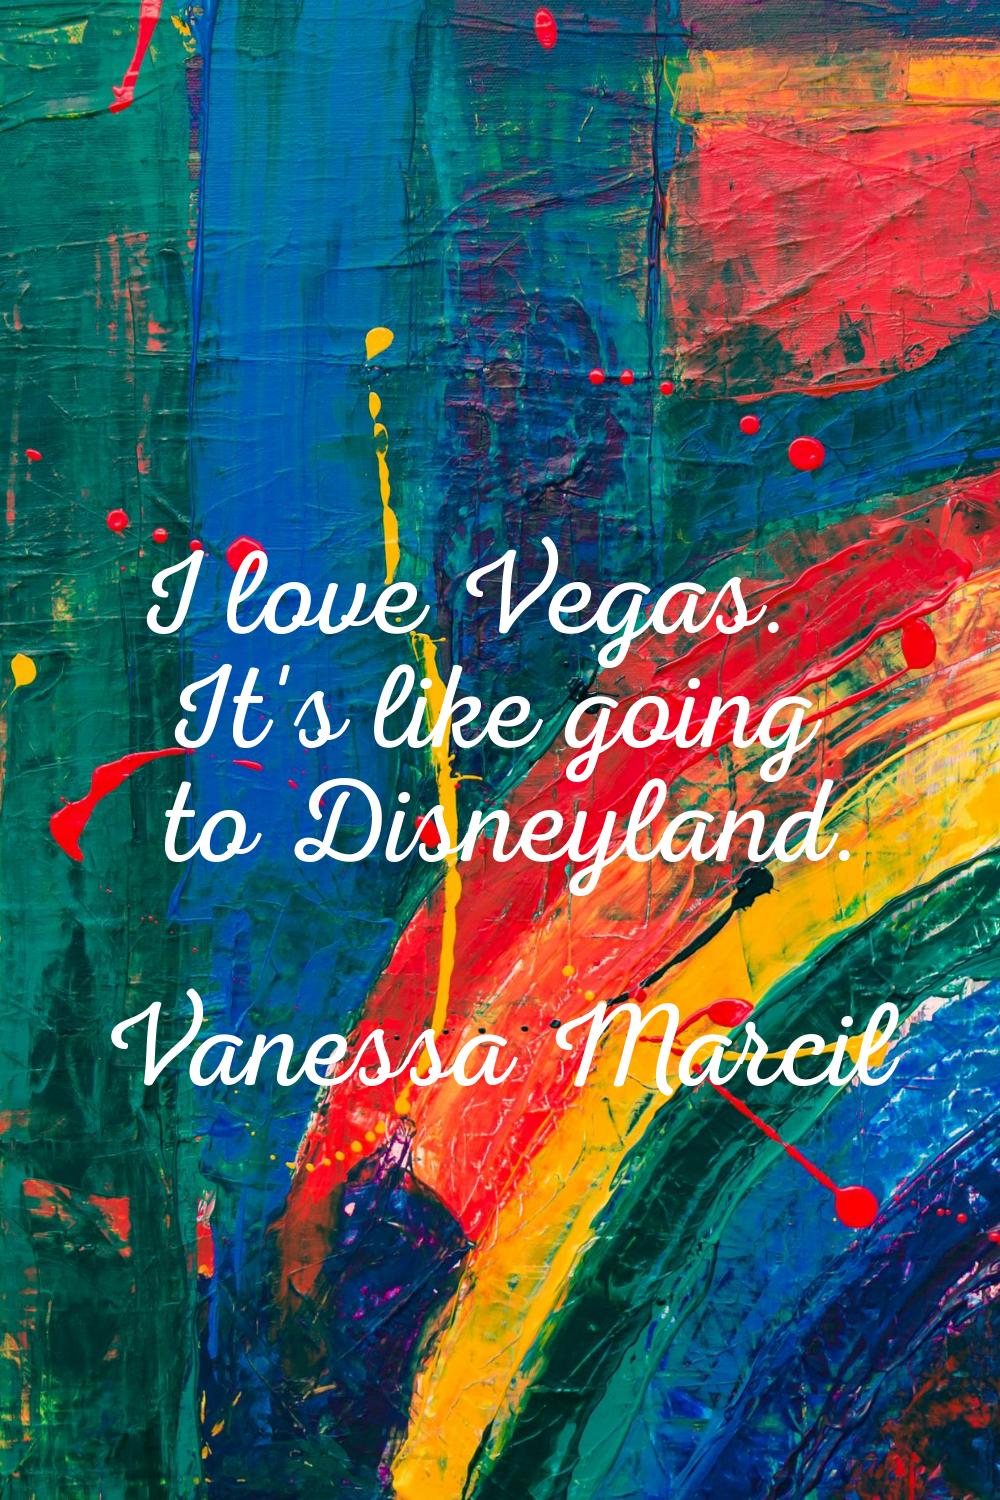 I love Vegas. It's like going to Disneyland.